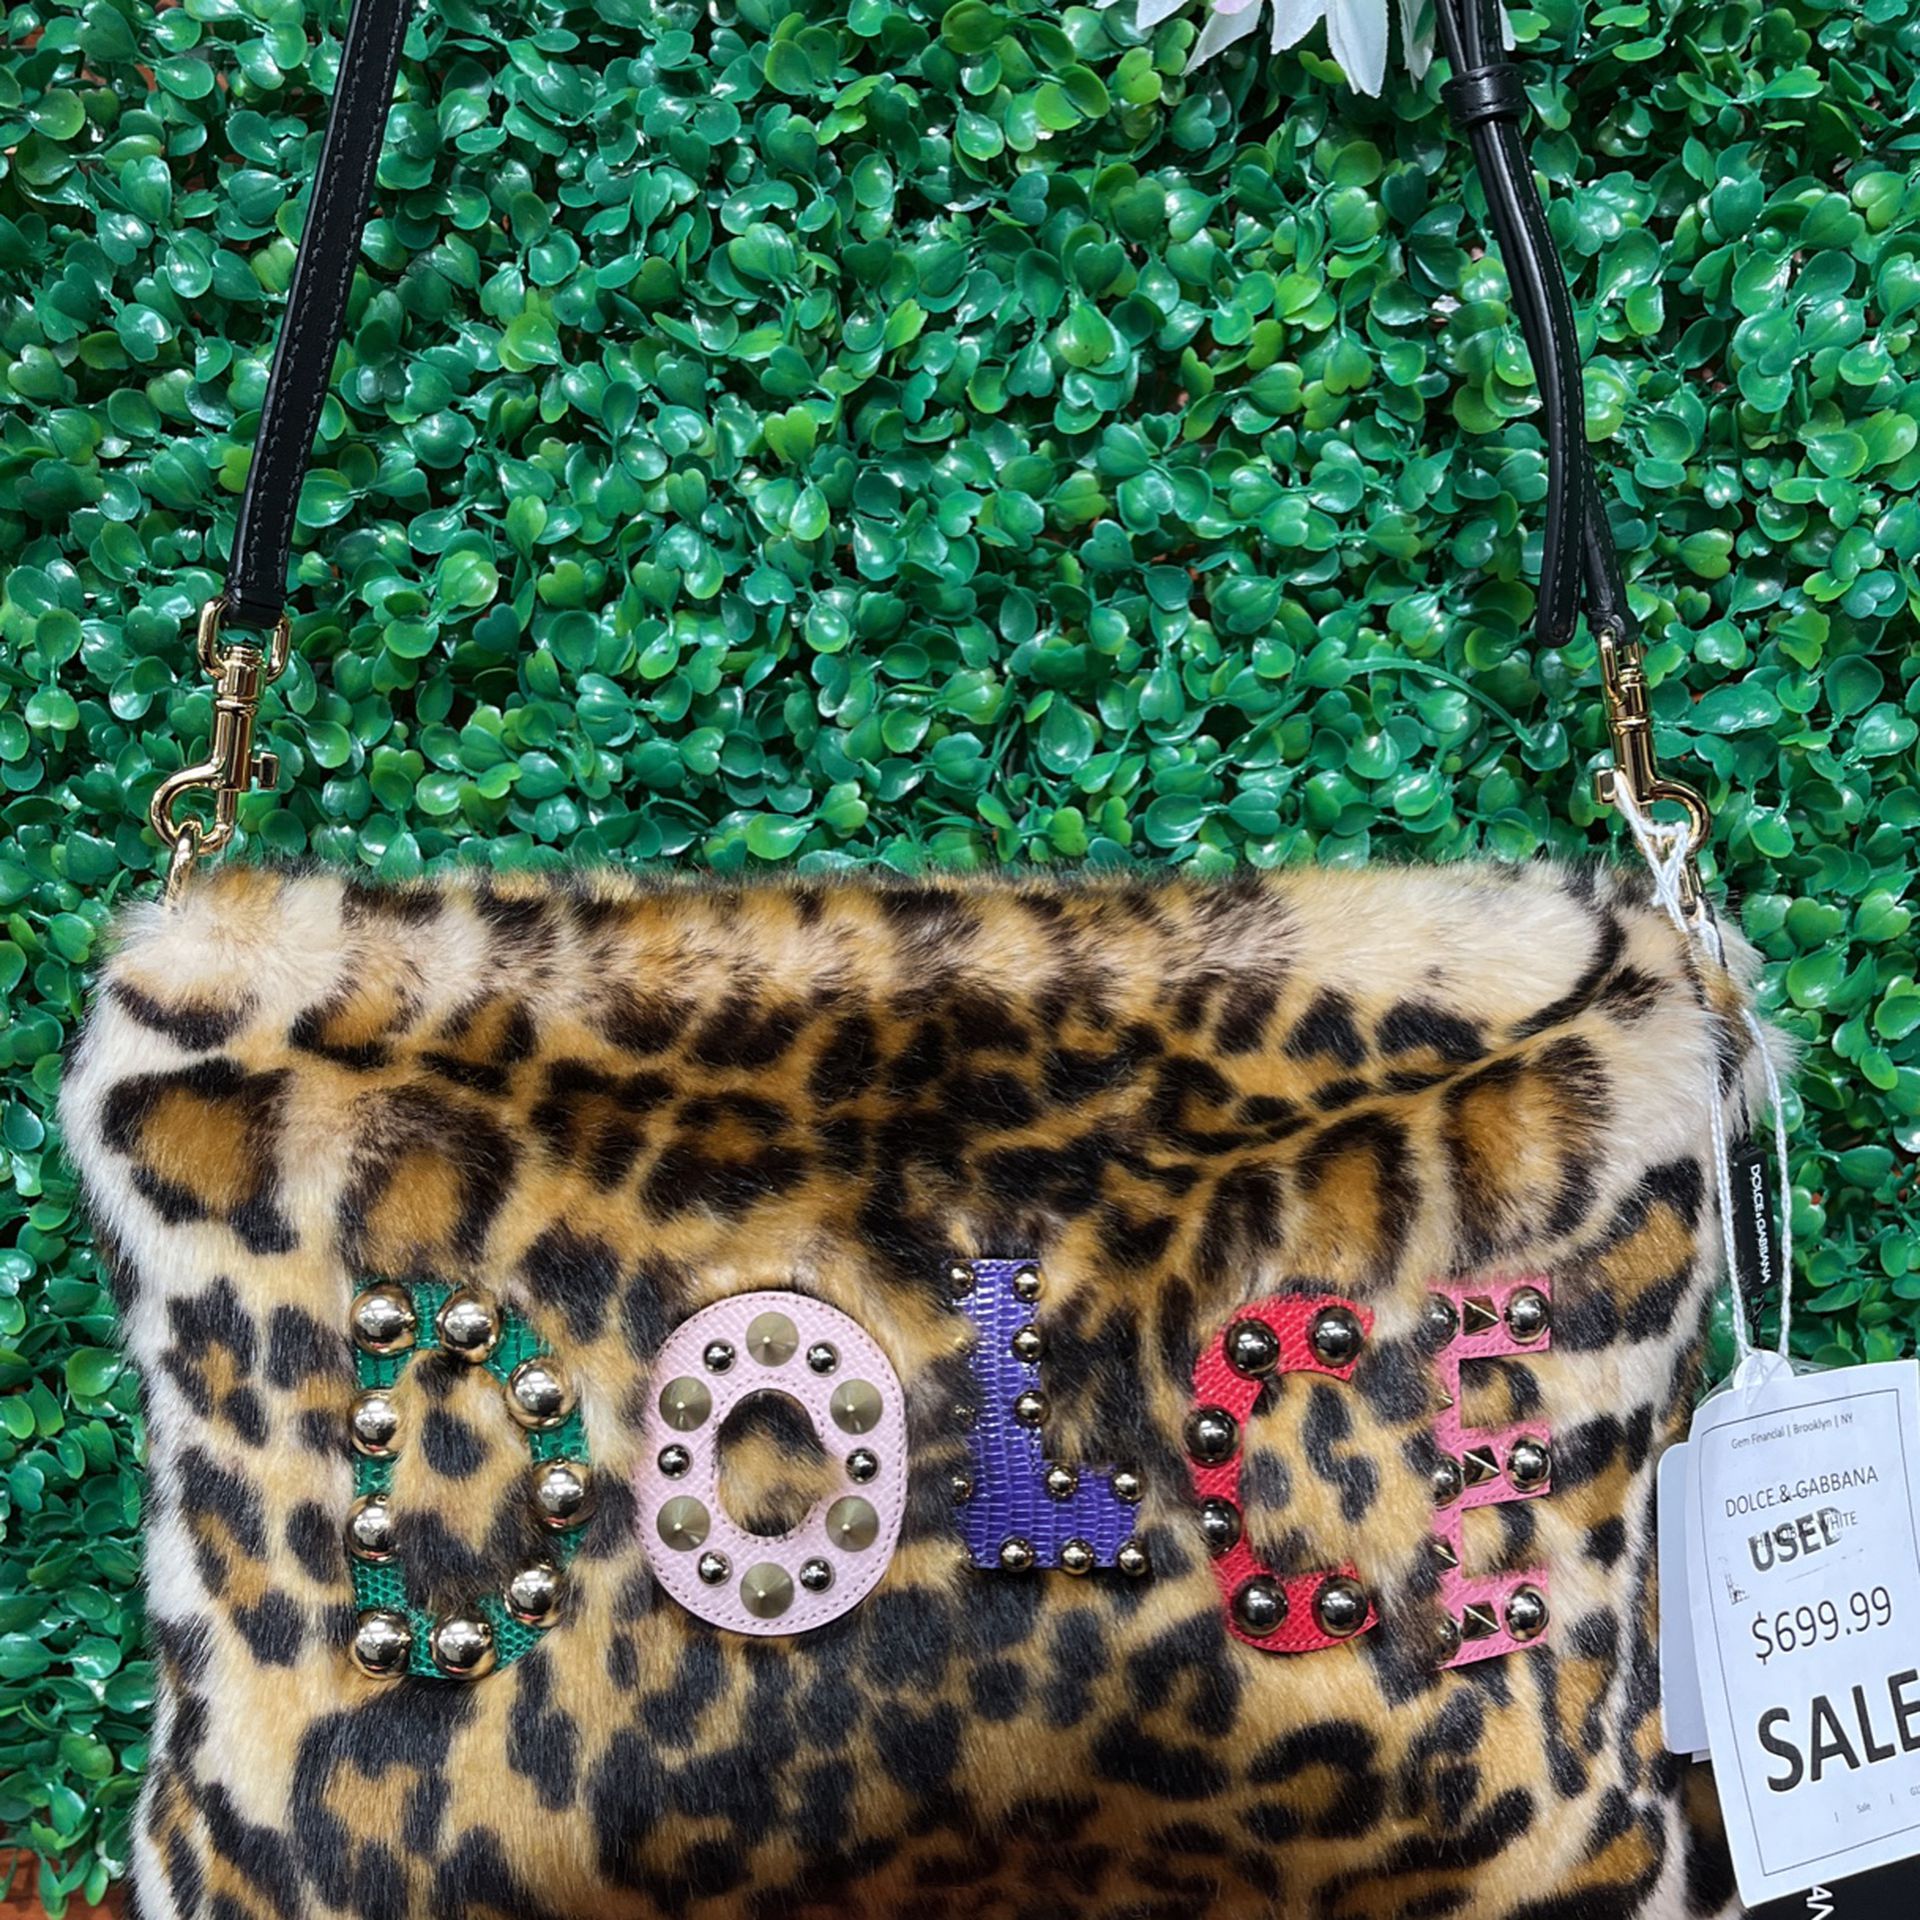 Dolce & Gabbana Handbag for Sale in Floral Park, NY - OfferUp